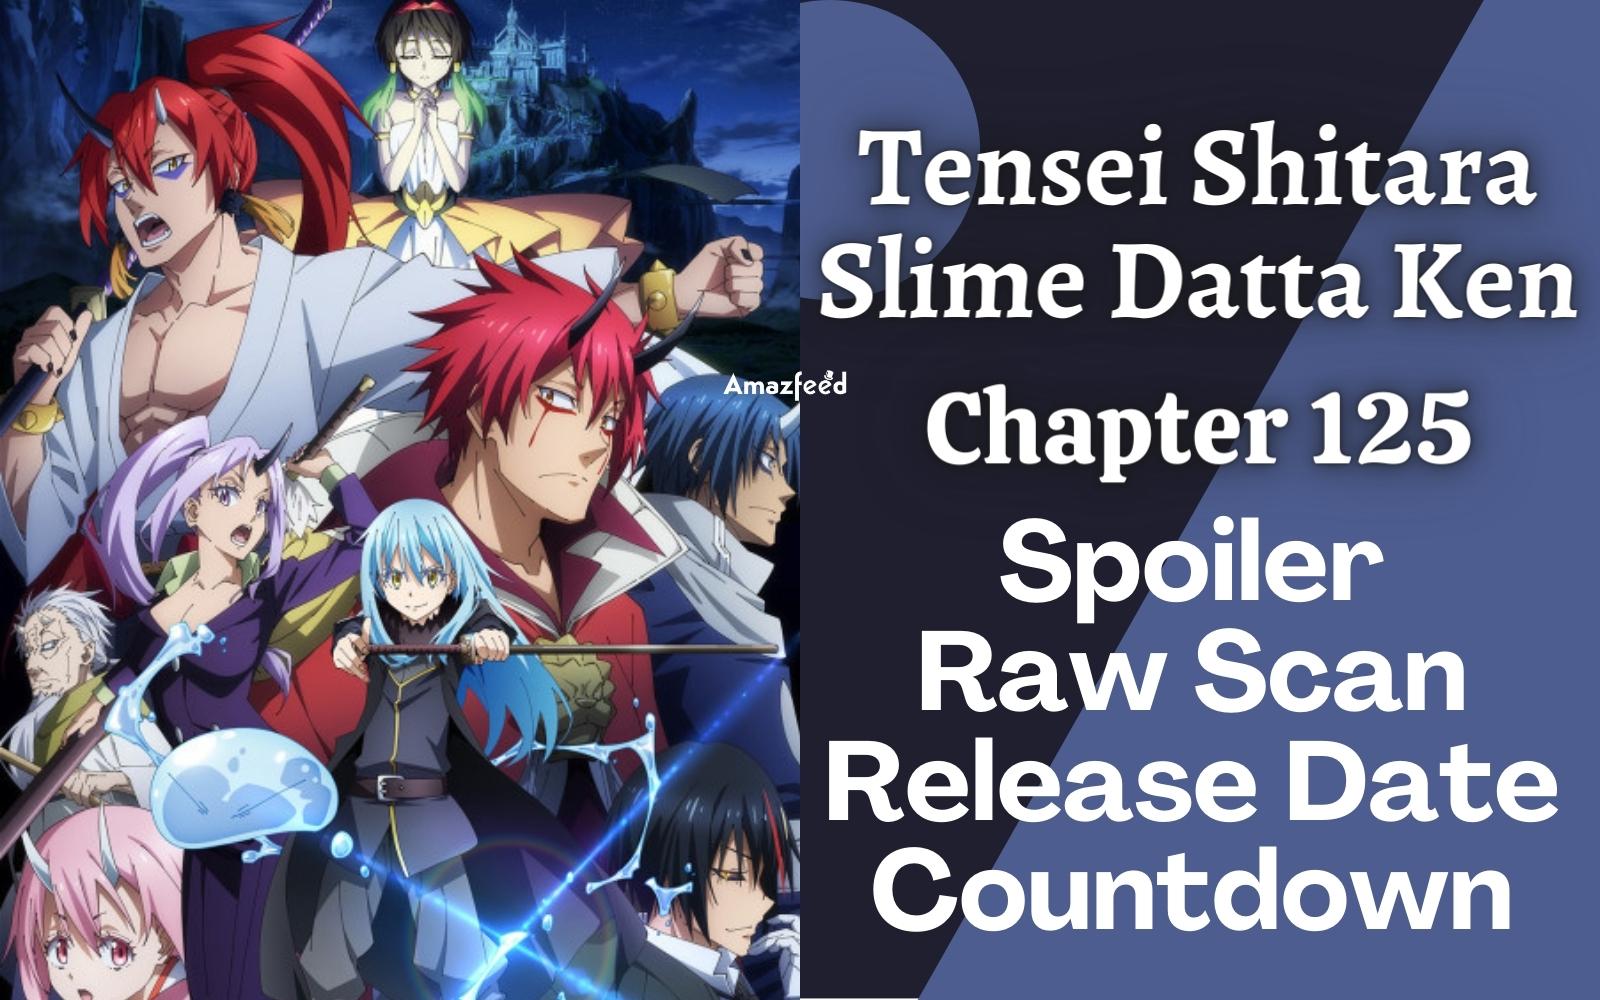 The Ways of the Monster Nation Volume 3, Tensei Shitara Slime Datta Ken  Wiki